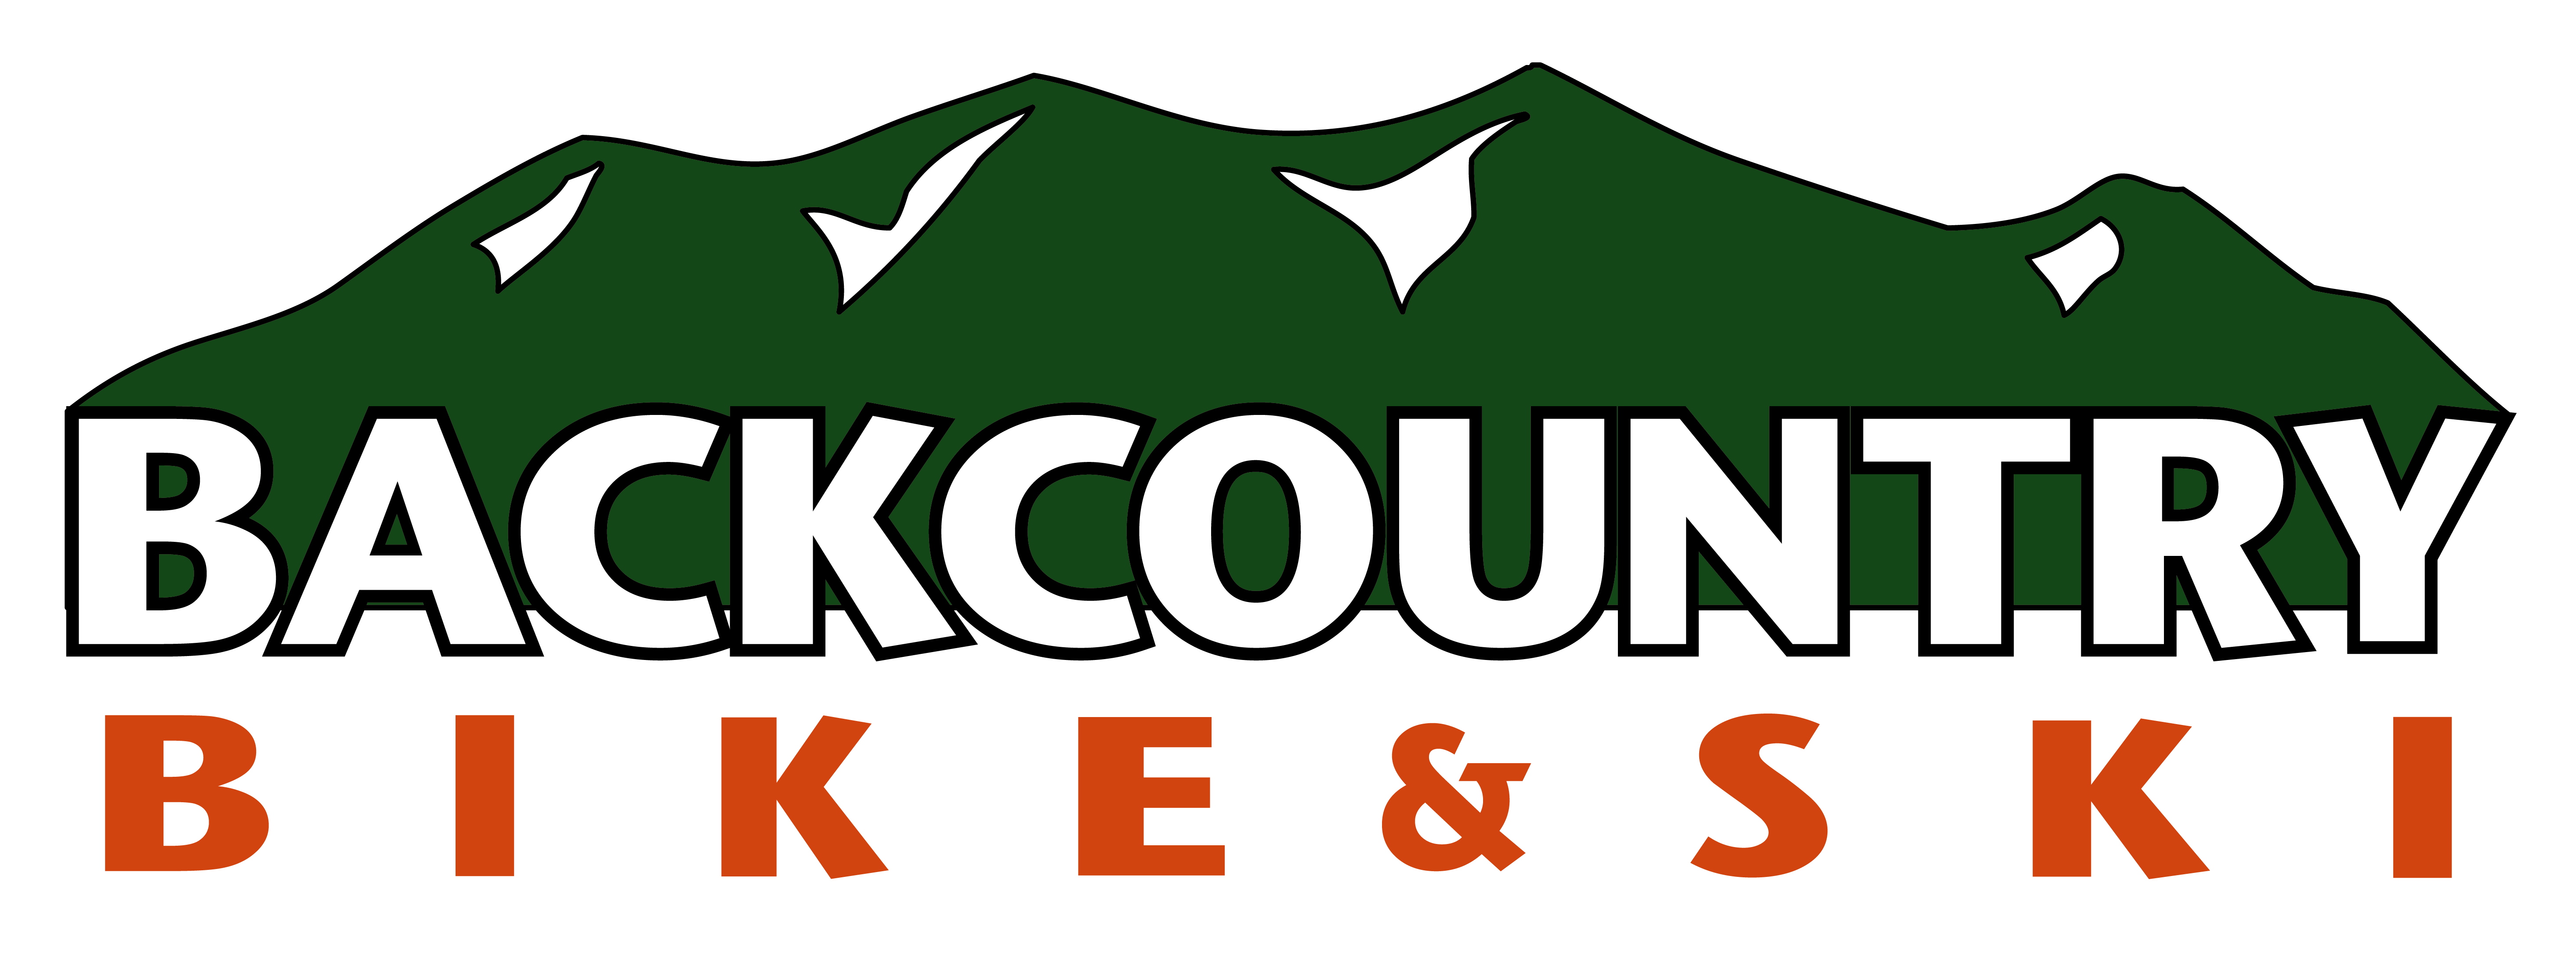 Backcountry Bike & Ski